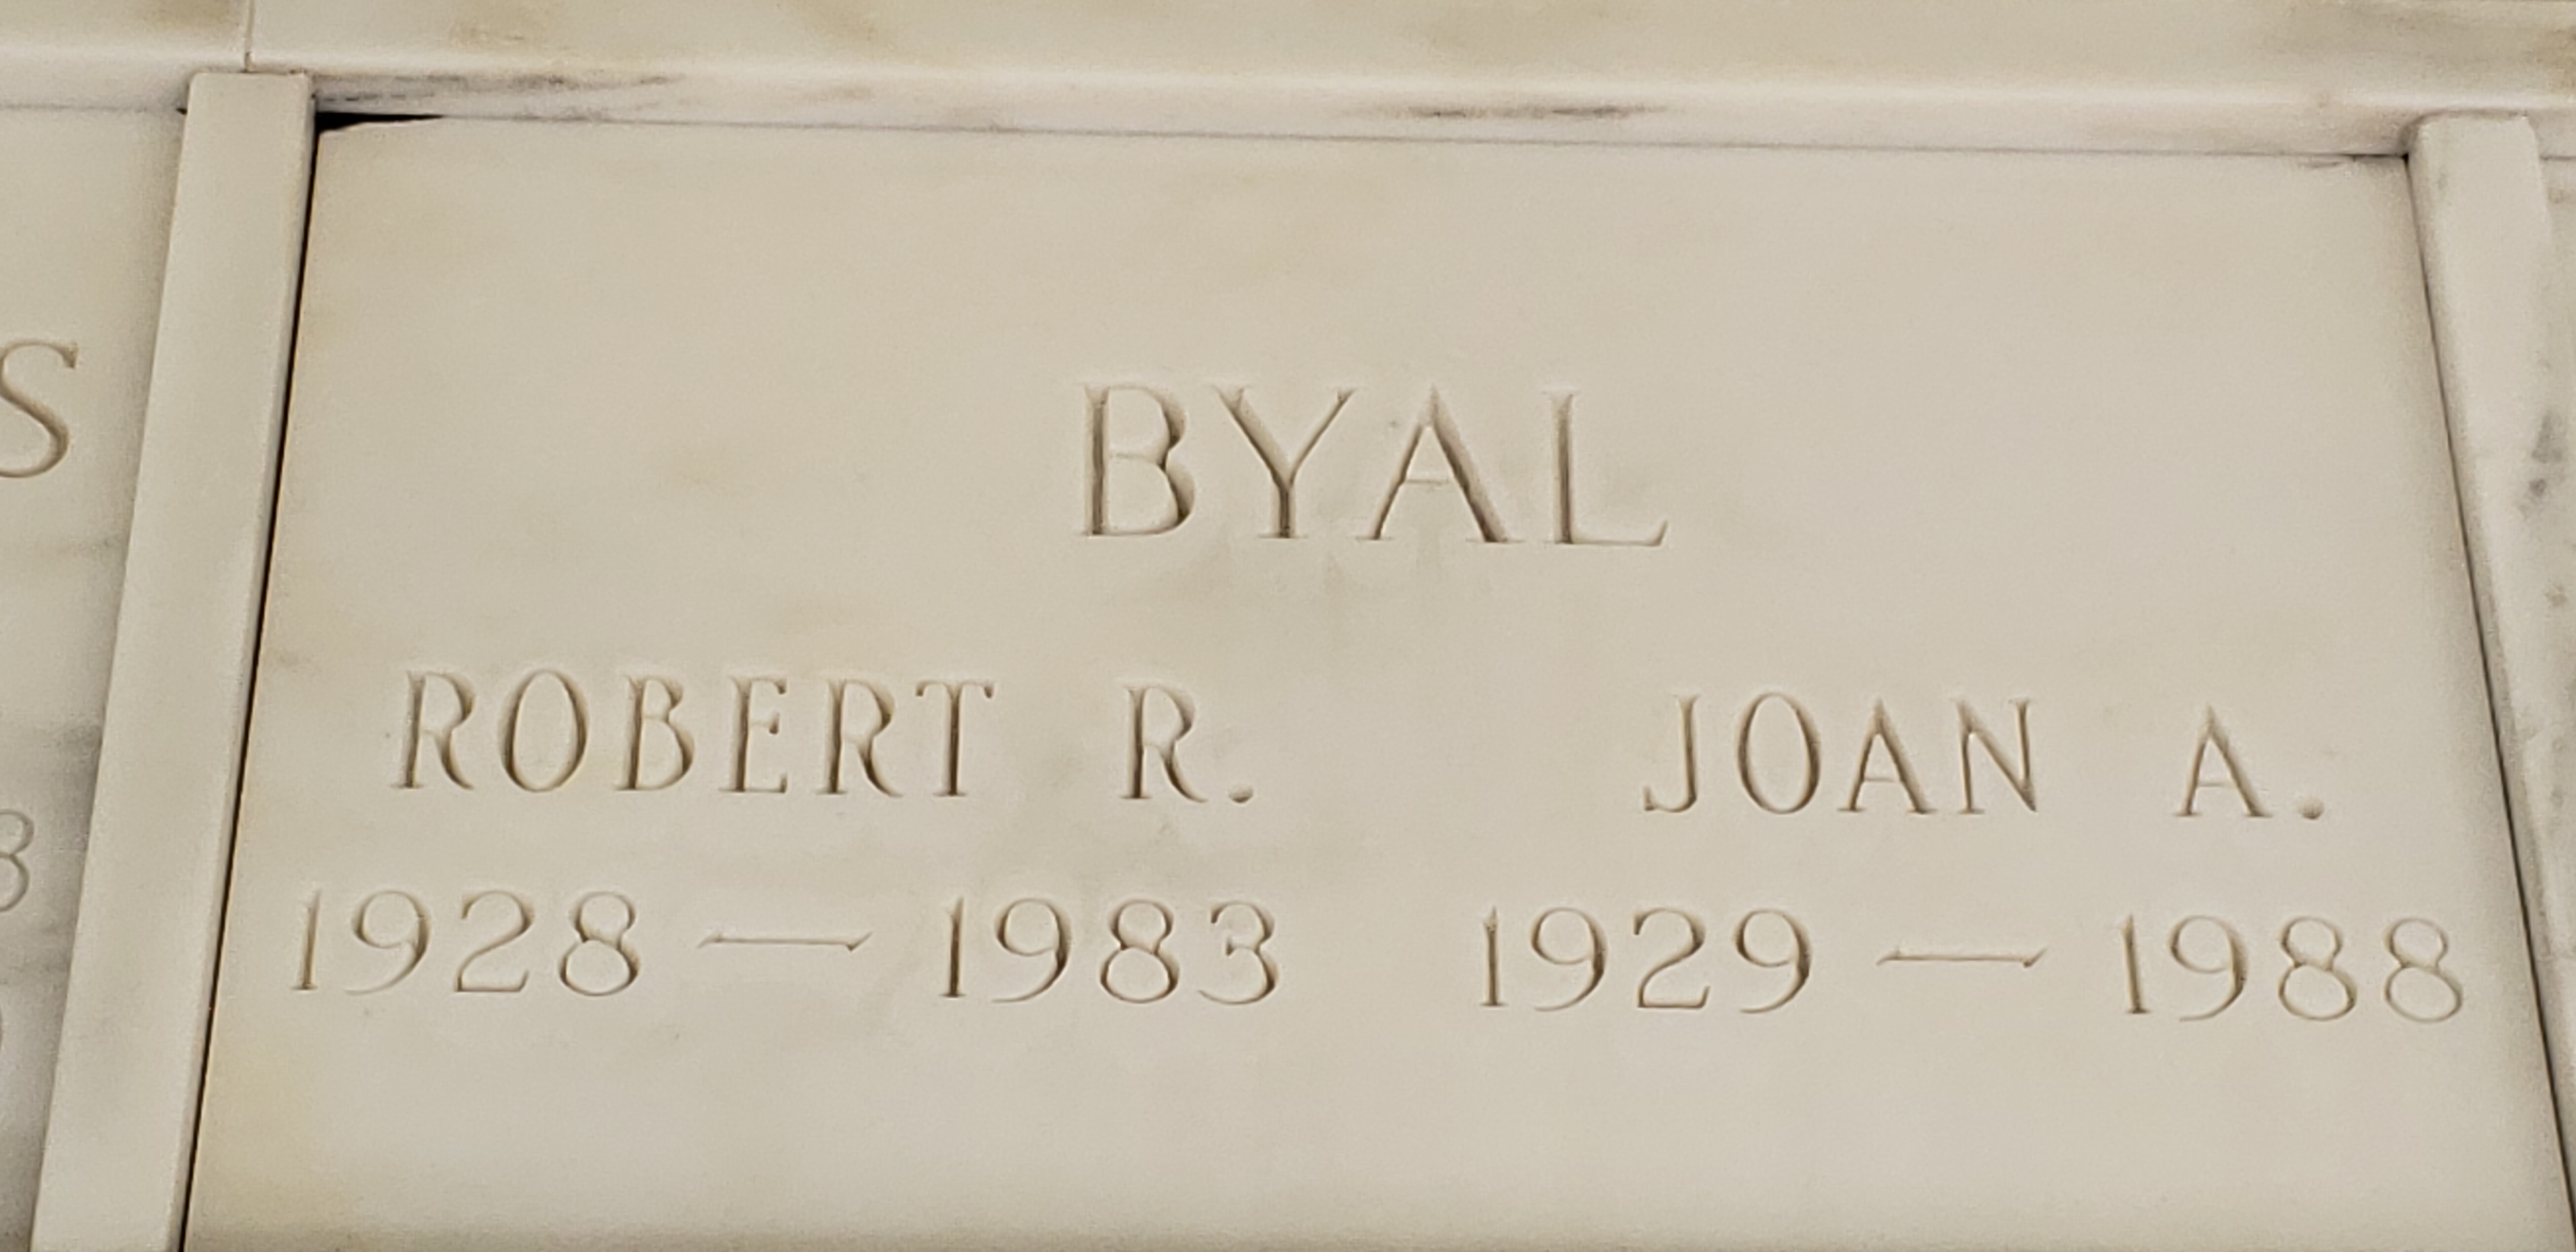 Robert R Byal